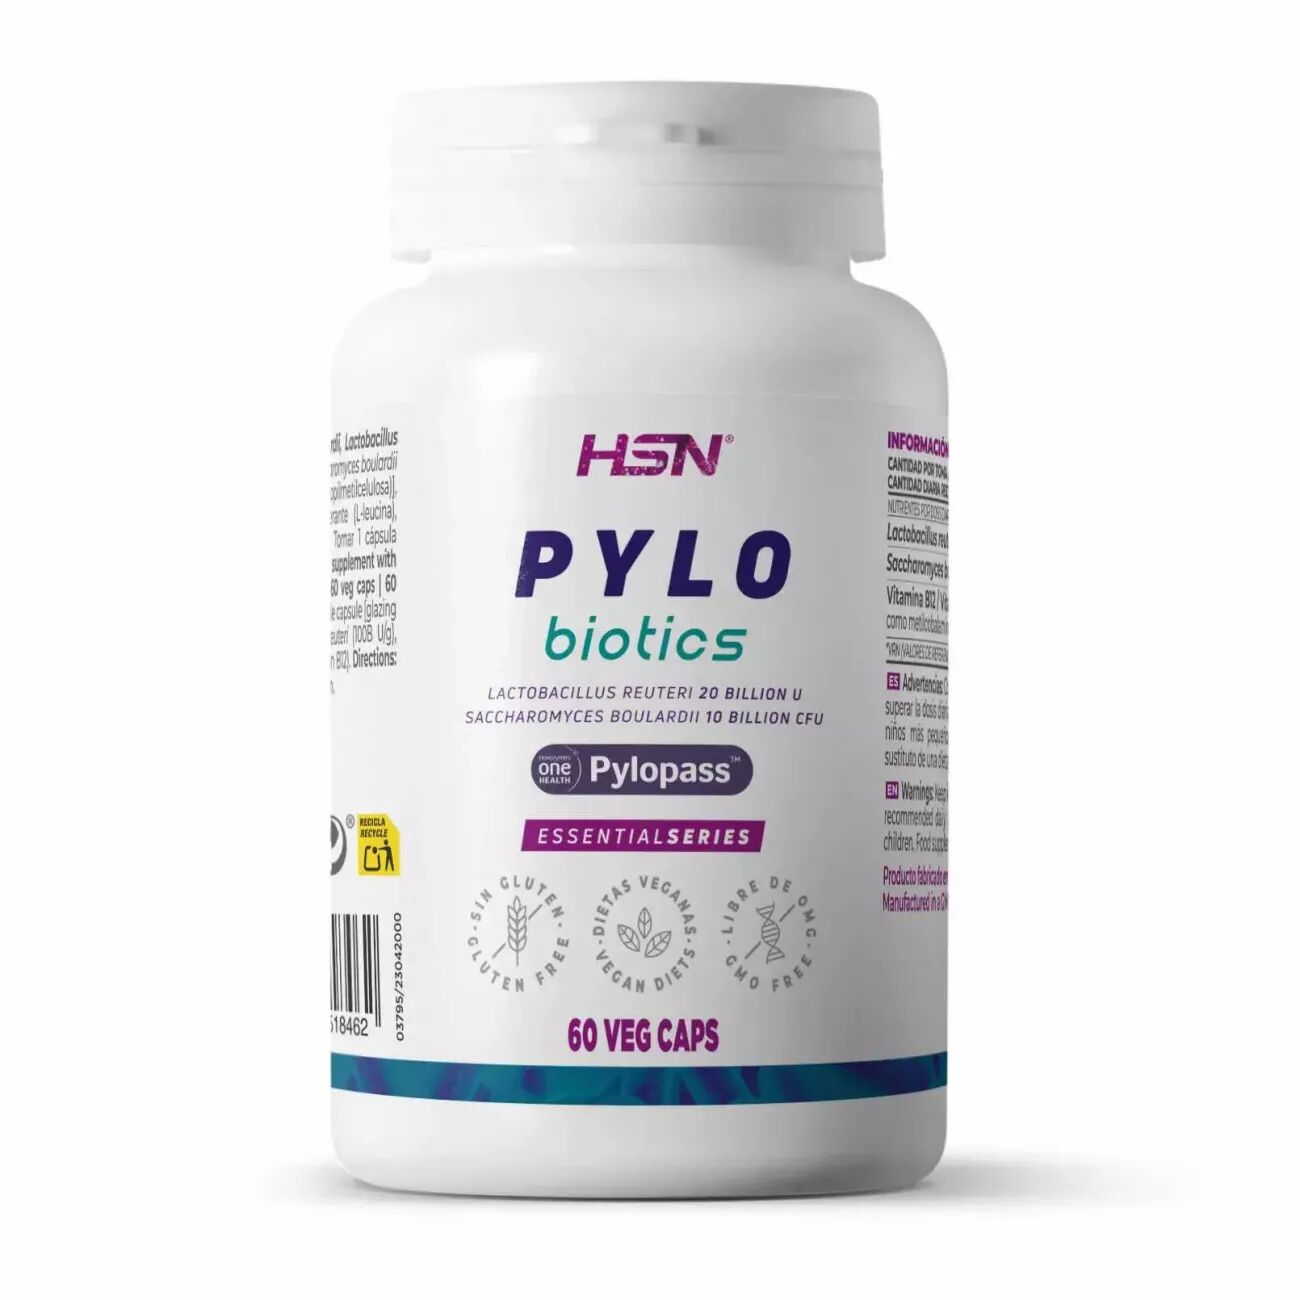 HSN Pylo biotics 30b ufc (pylopass™) - 60 veg caps